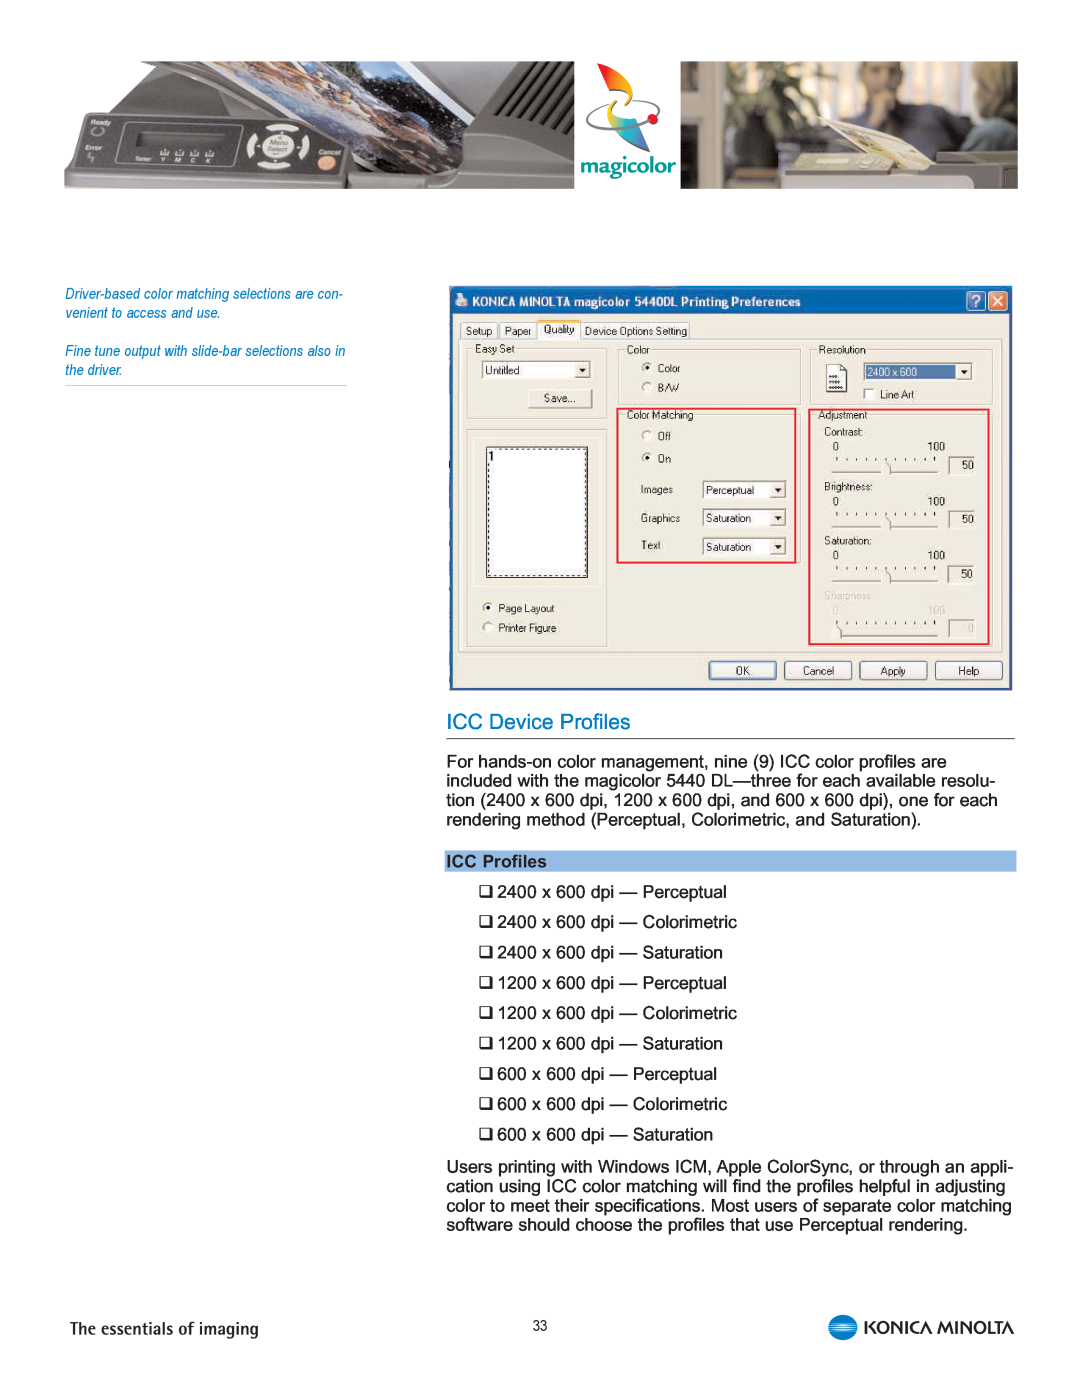 Konica Minolta 5440 DL manual ICC Device Profiles, ICC Profiles 